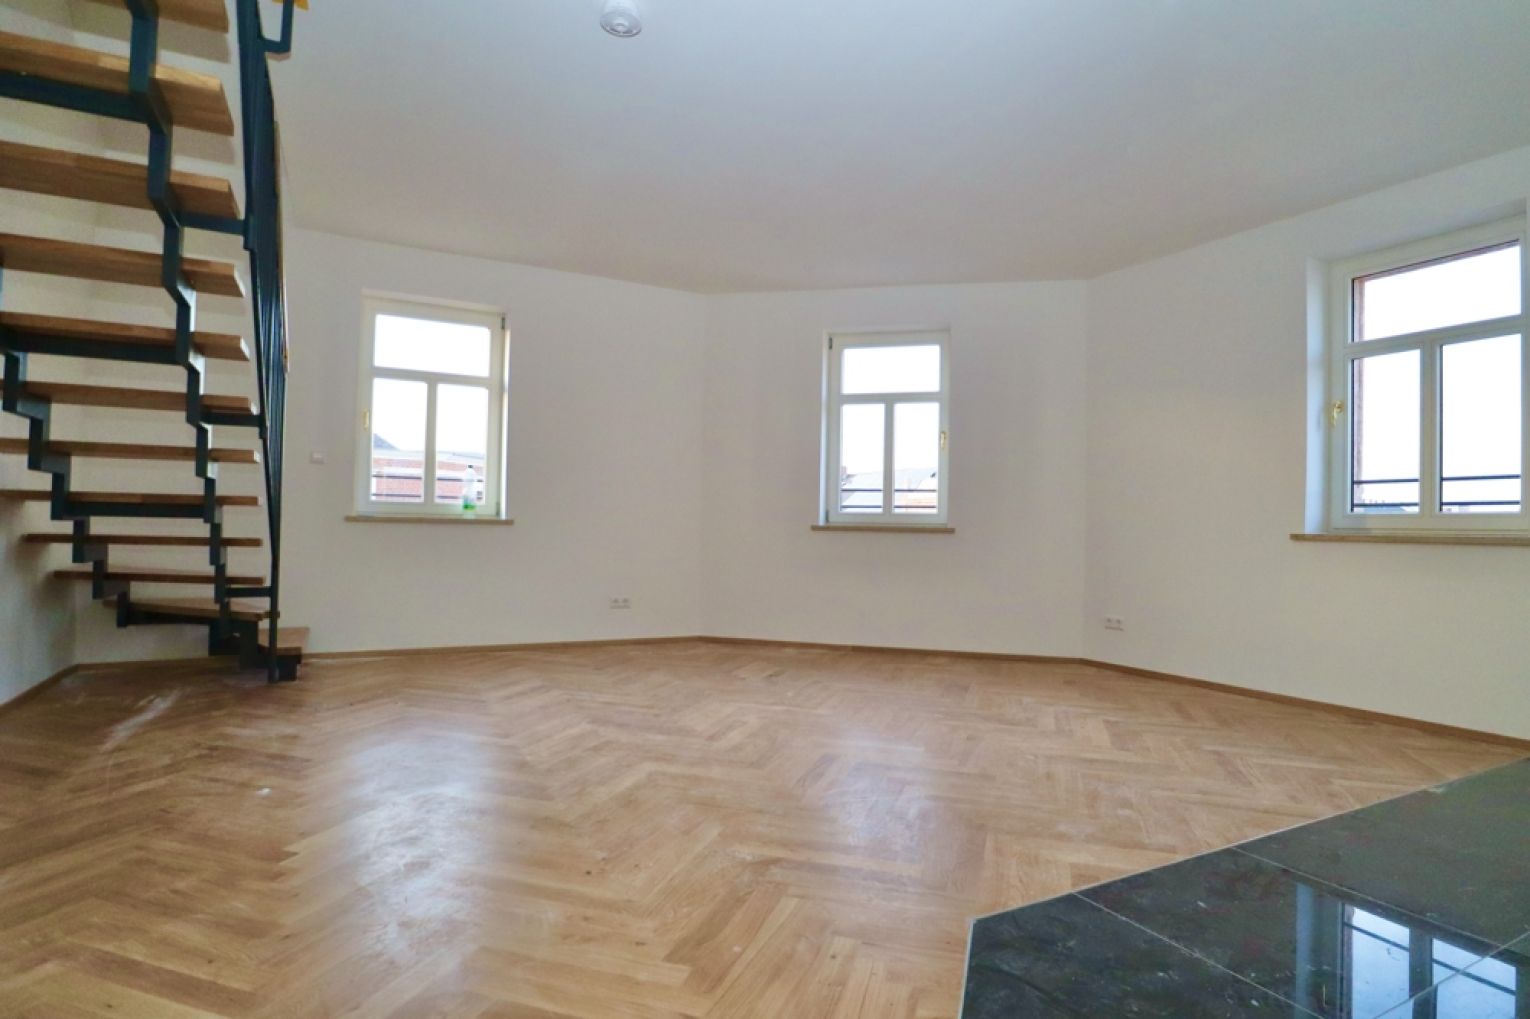 Terrasse • 5-Zimmer • Maisonette • ERSTBEZUG • Chemnitz • Fußbodenheizung • Sonnenberg • jetzt mieten